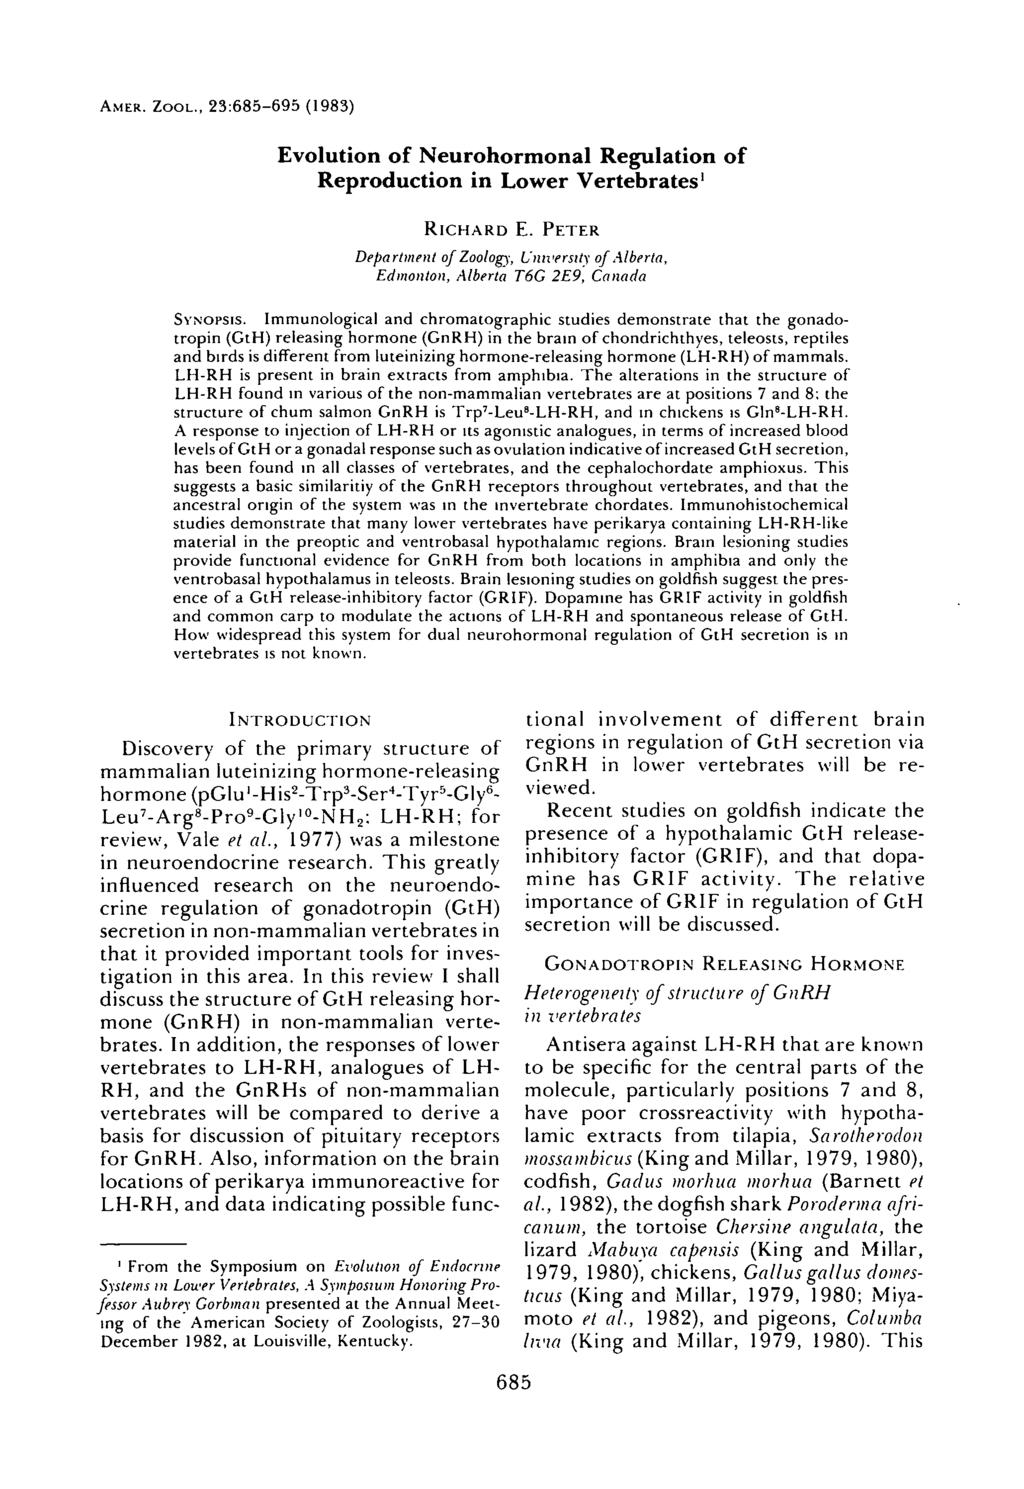 AMER. ZOOL., 23:685-695 (1983) Evolution of Neurohormonal Regulation of Reproduction in Lower Vertebrates' RICHARD E.